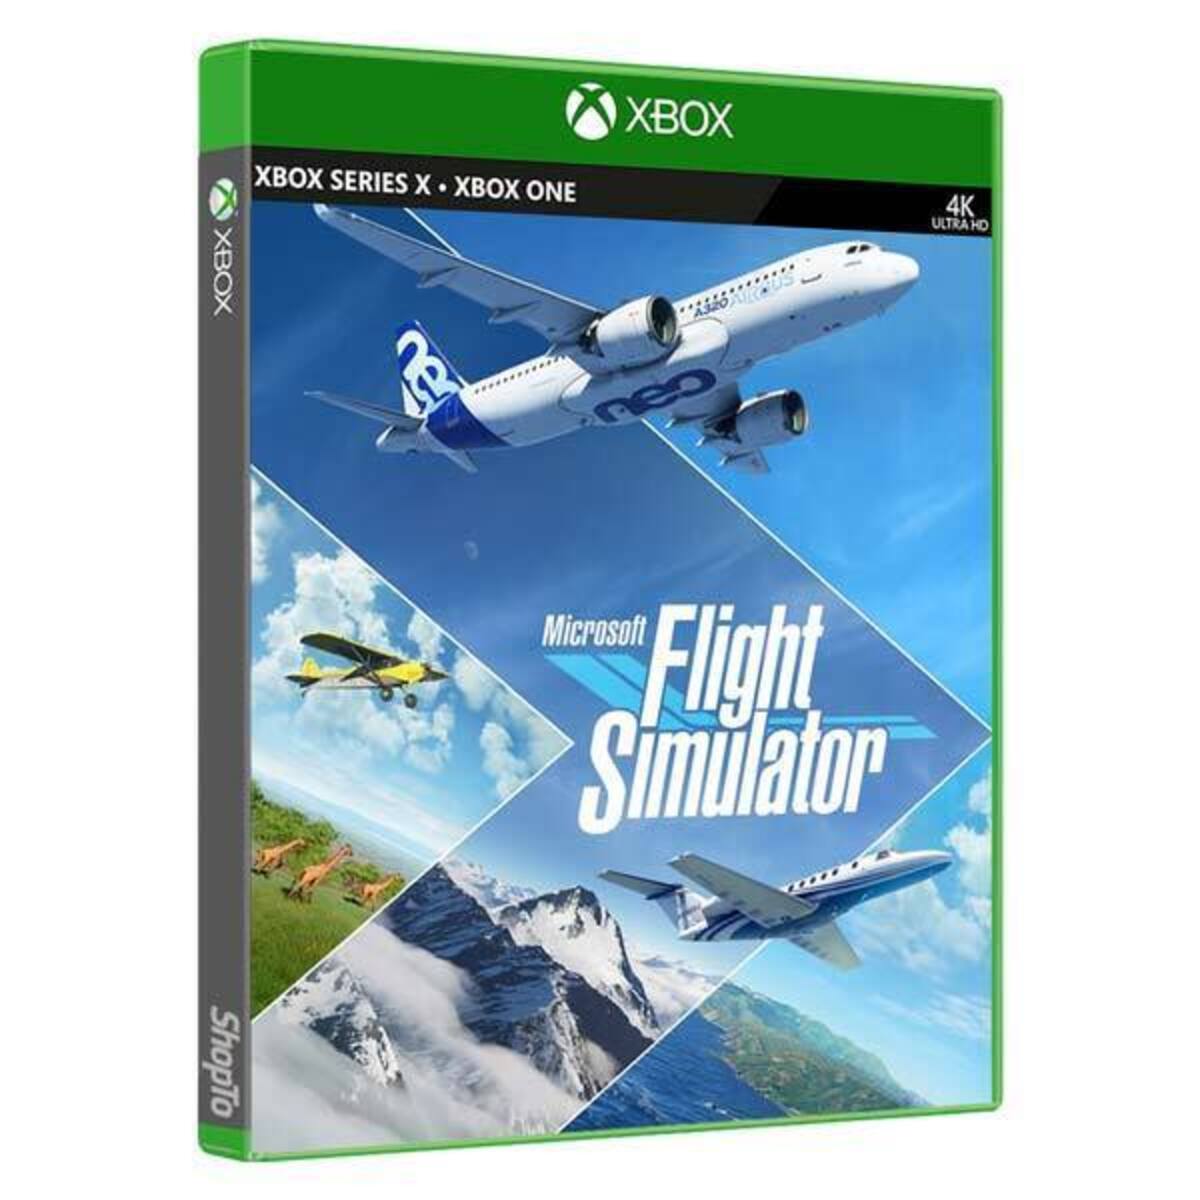 Flight Simulator for Xbox Series X